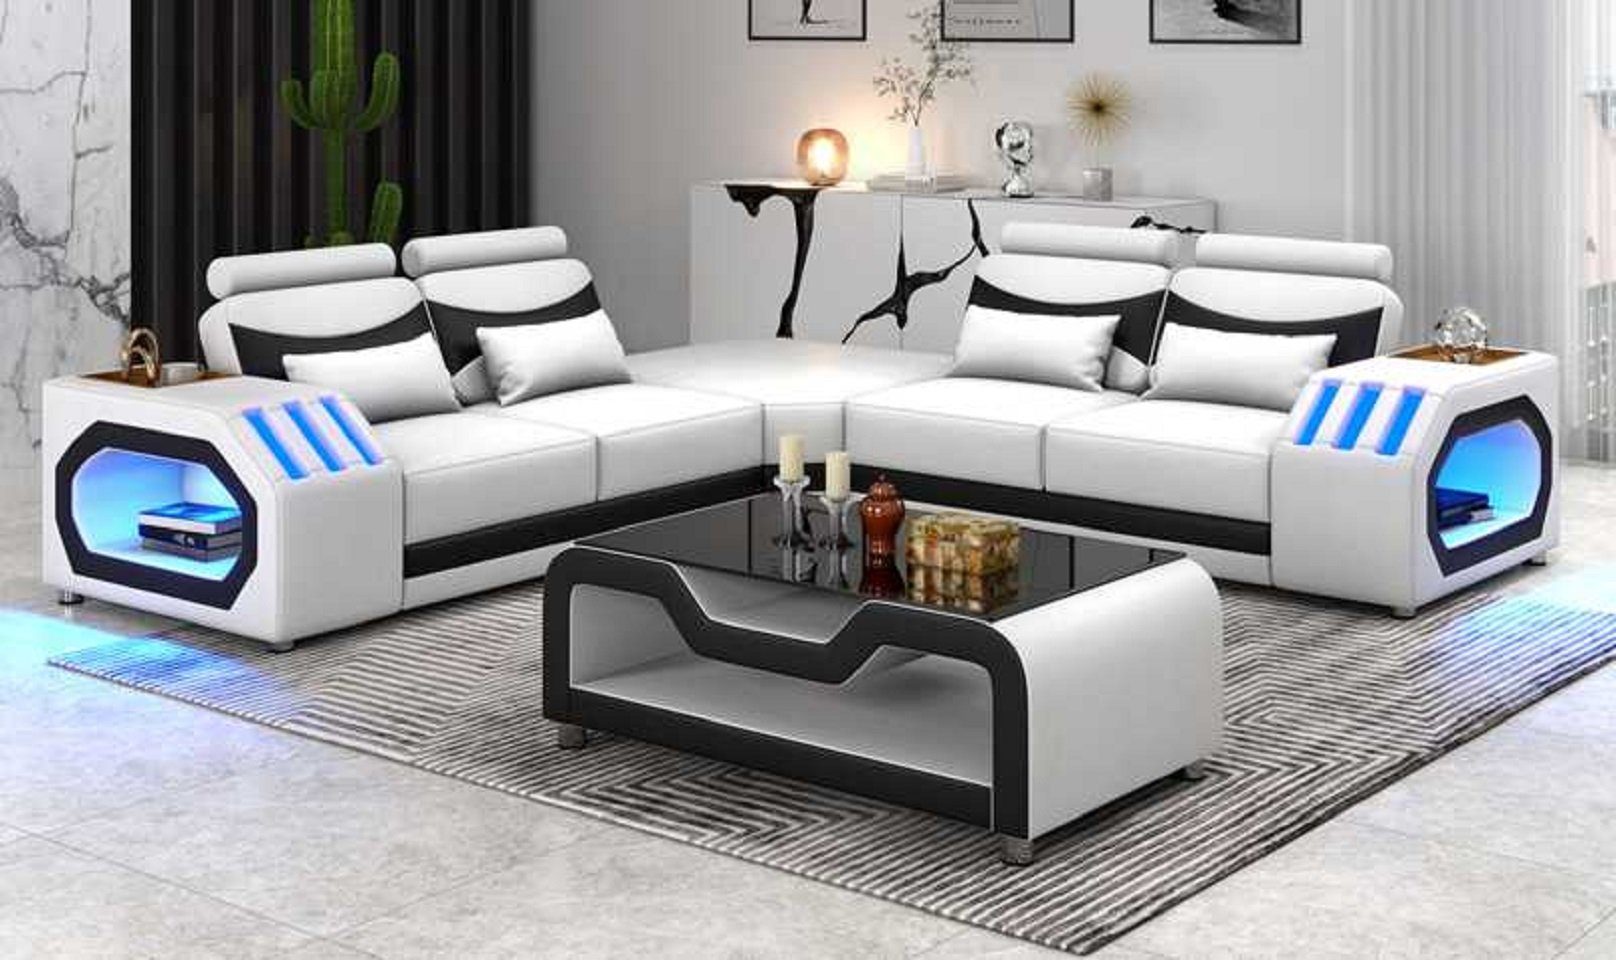 Moderne, Ledersofa Form JVmoebel Couch Ecksofa 3 Europe Made L Ecksofa in Sofa Eckgarnitur Luxus Teile, Weiß/Schwarz